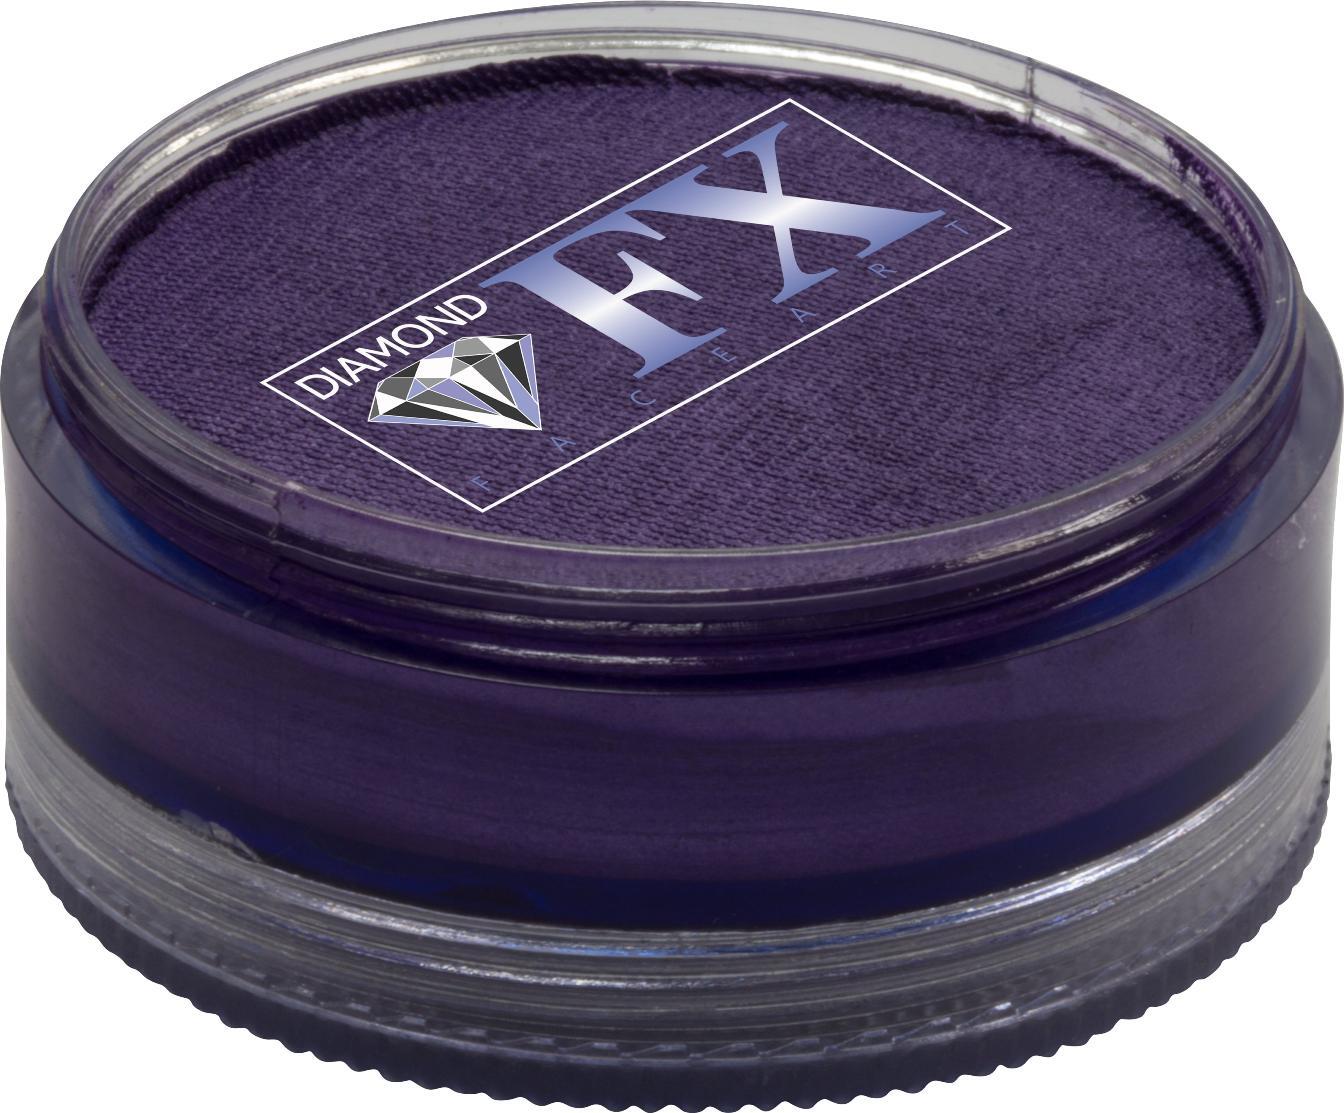 Diamond FX Purple Metallic 90g - Small Image